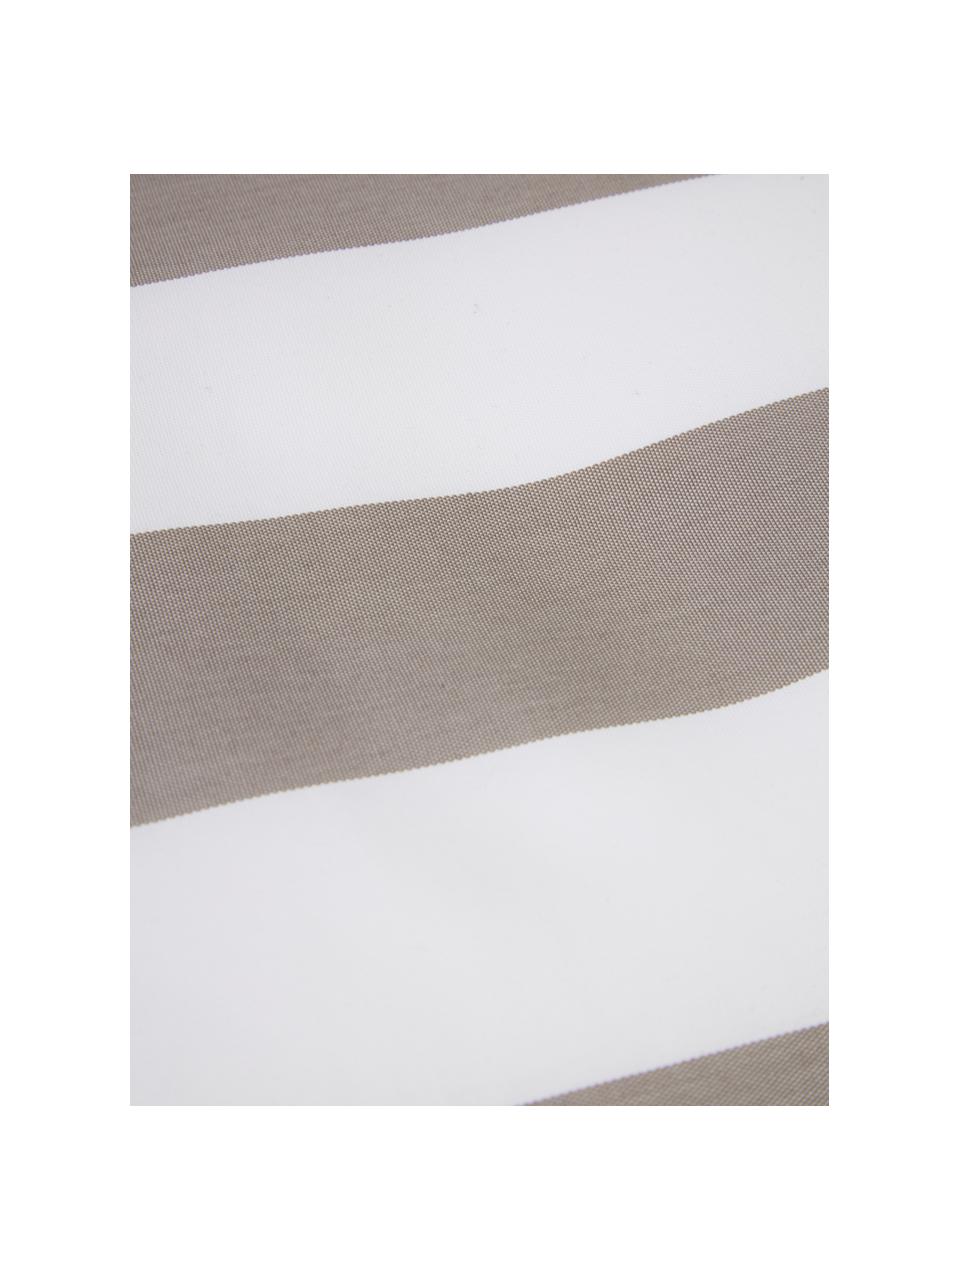 Cojín de suelo para exterior Korfu, Tapizado: 100% polipropileno, recub, Gris pardo, blanco, An 65 x Al 35 cm